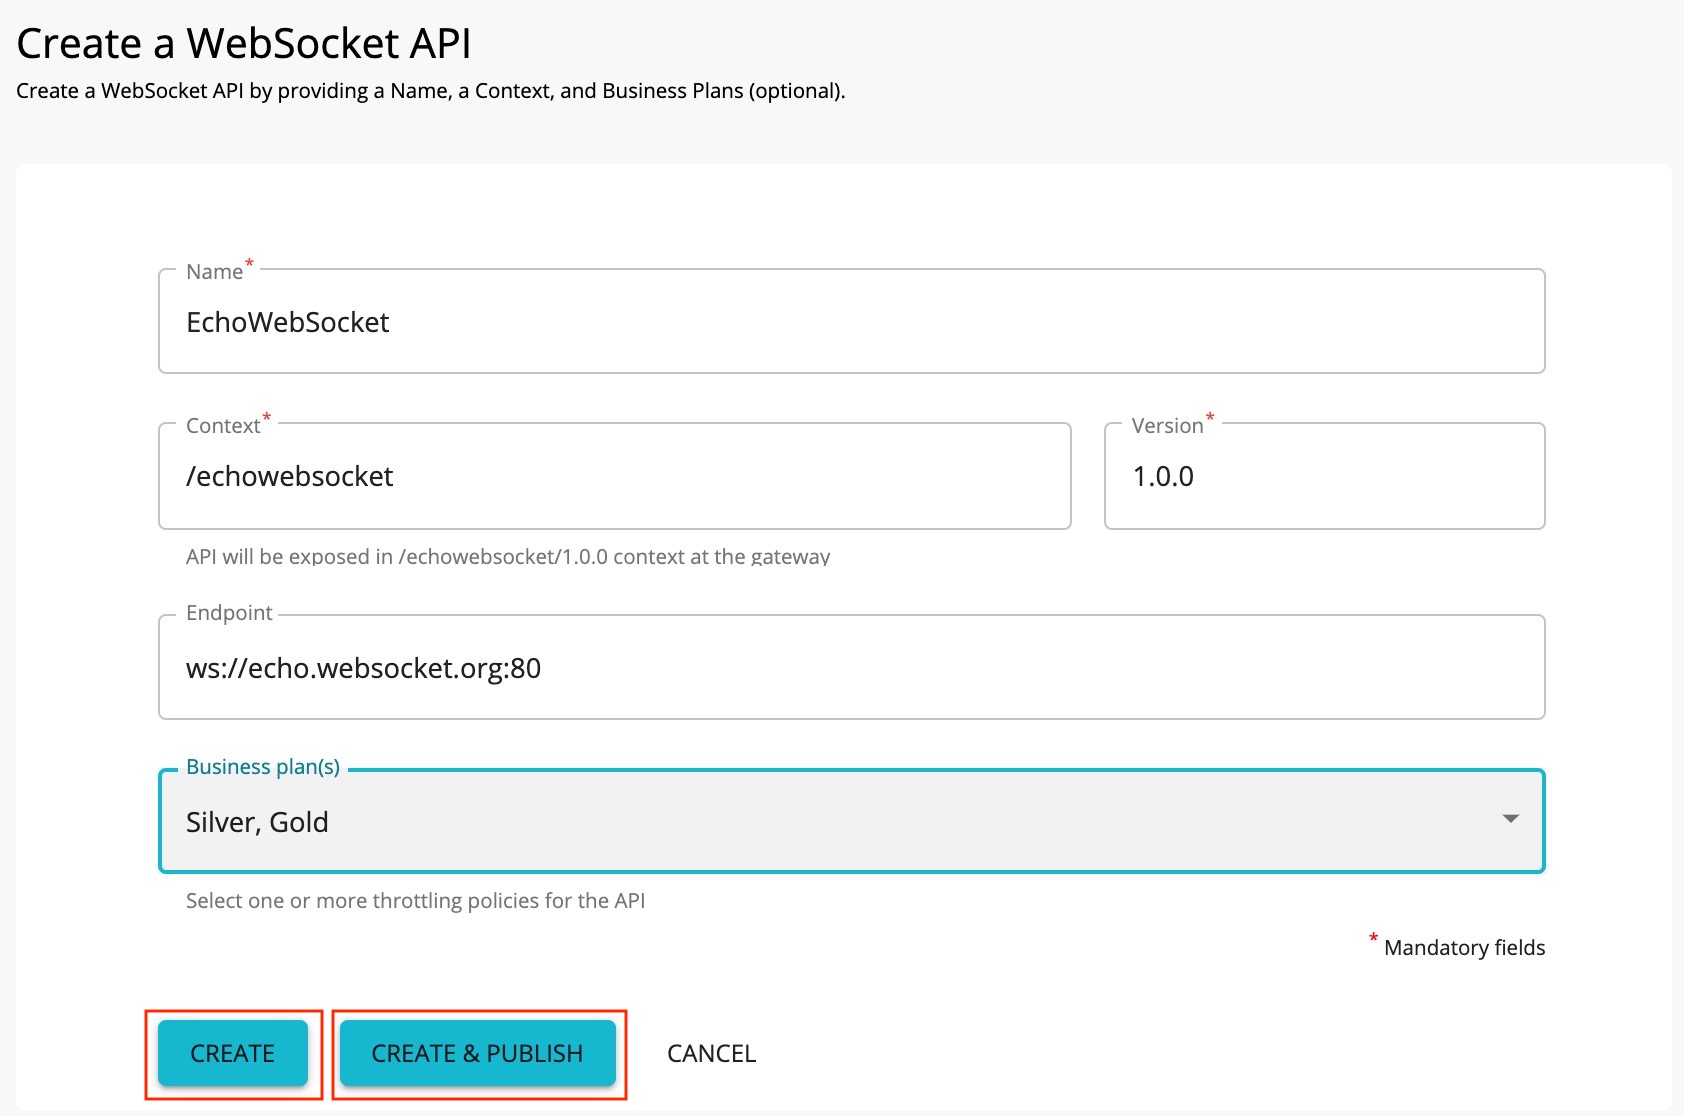 Create a WebSocket API menu